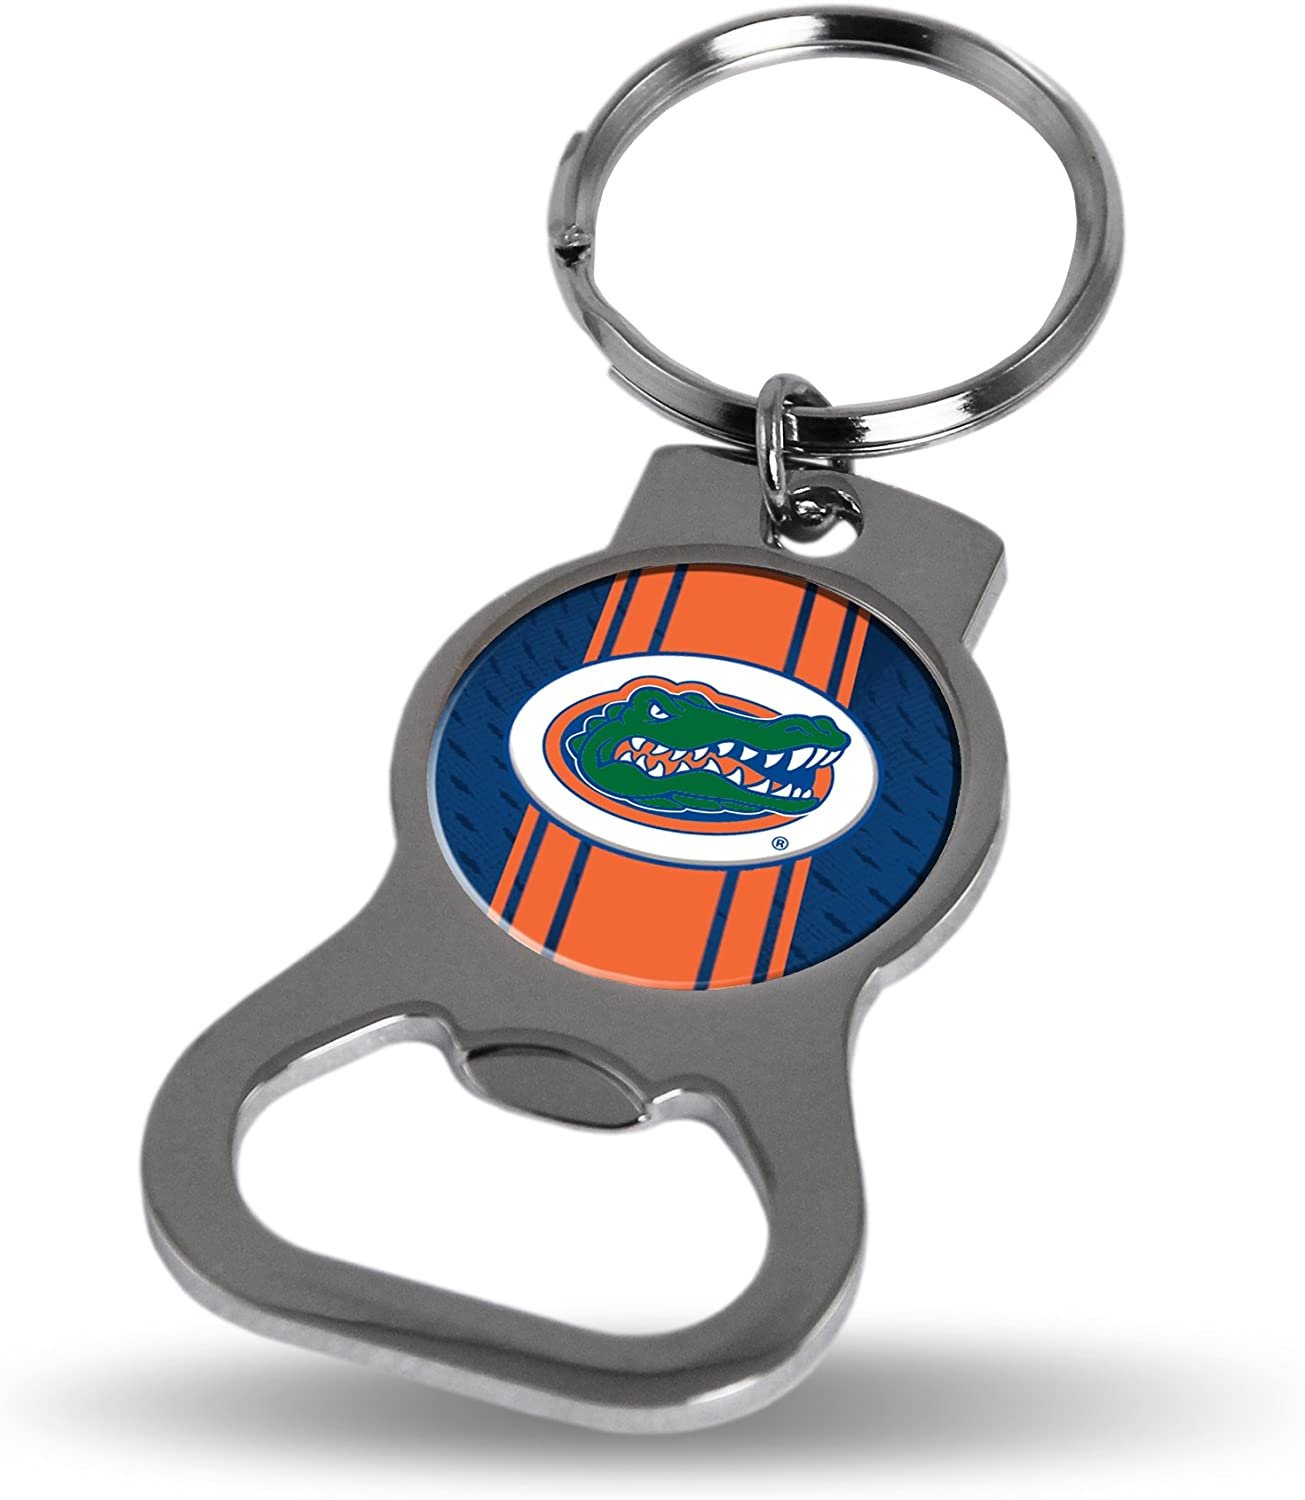 University of Florida Gators Premium Solid Metal Bottle Opener Keychain, Silver Key Ring, Team Logo